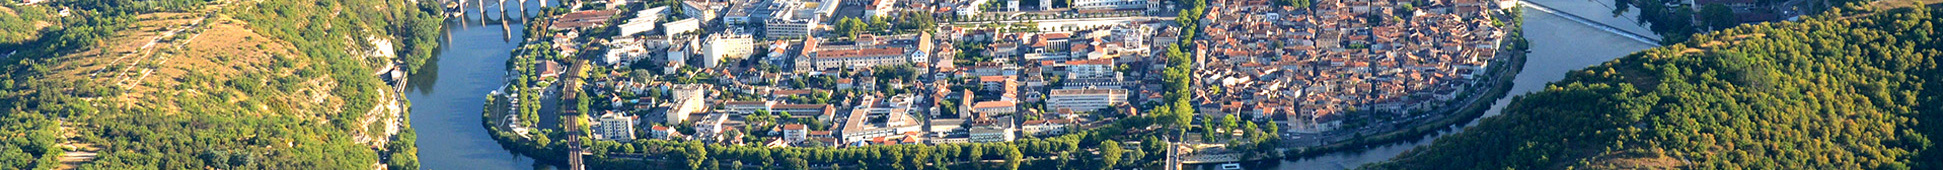 Ville de Cahors vue de haut